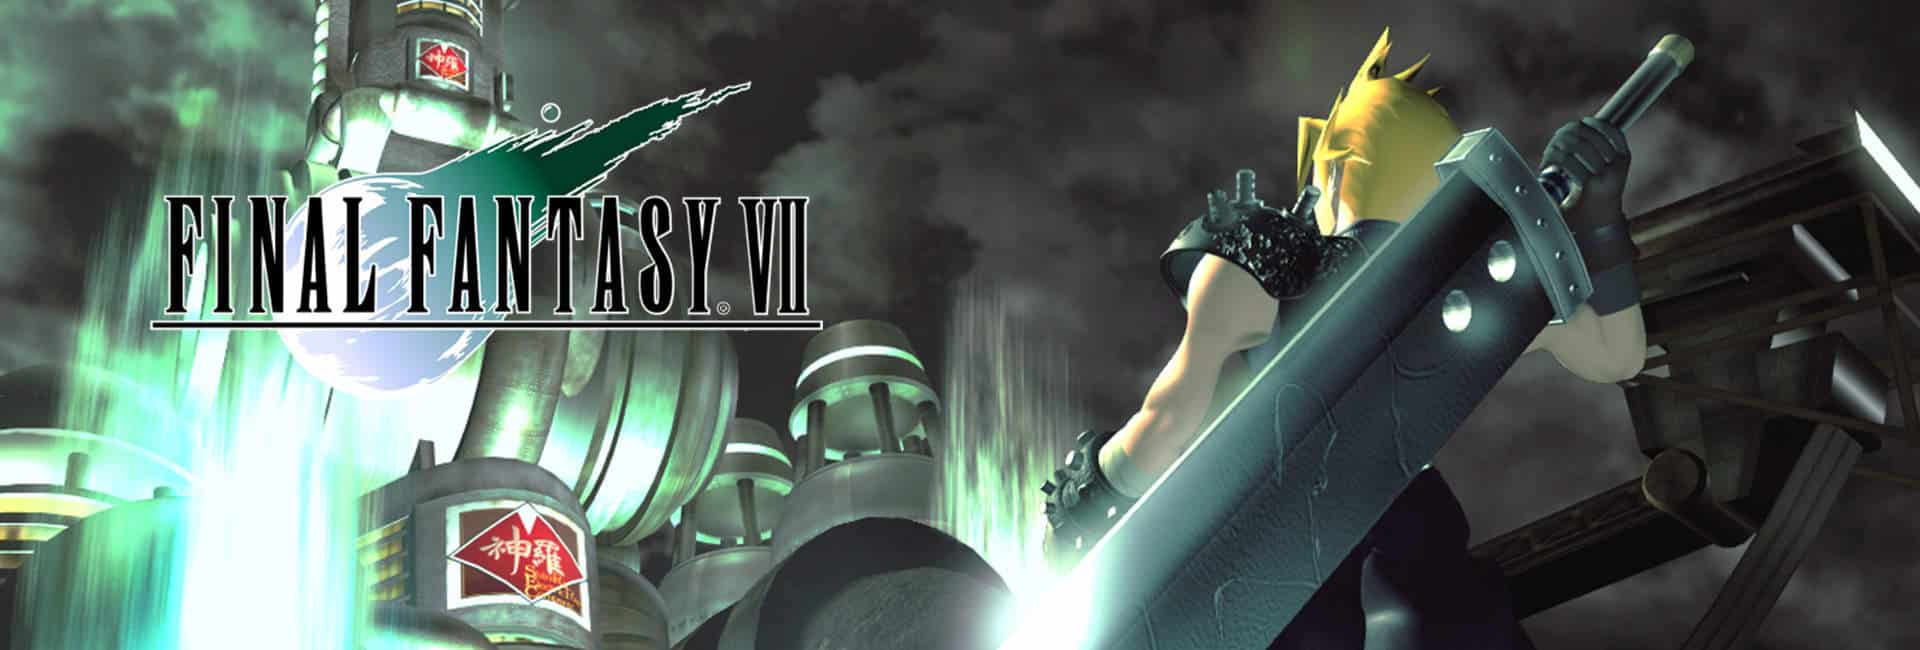 Final-Fantasy-VII-Banner.jpg